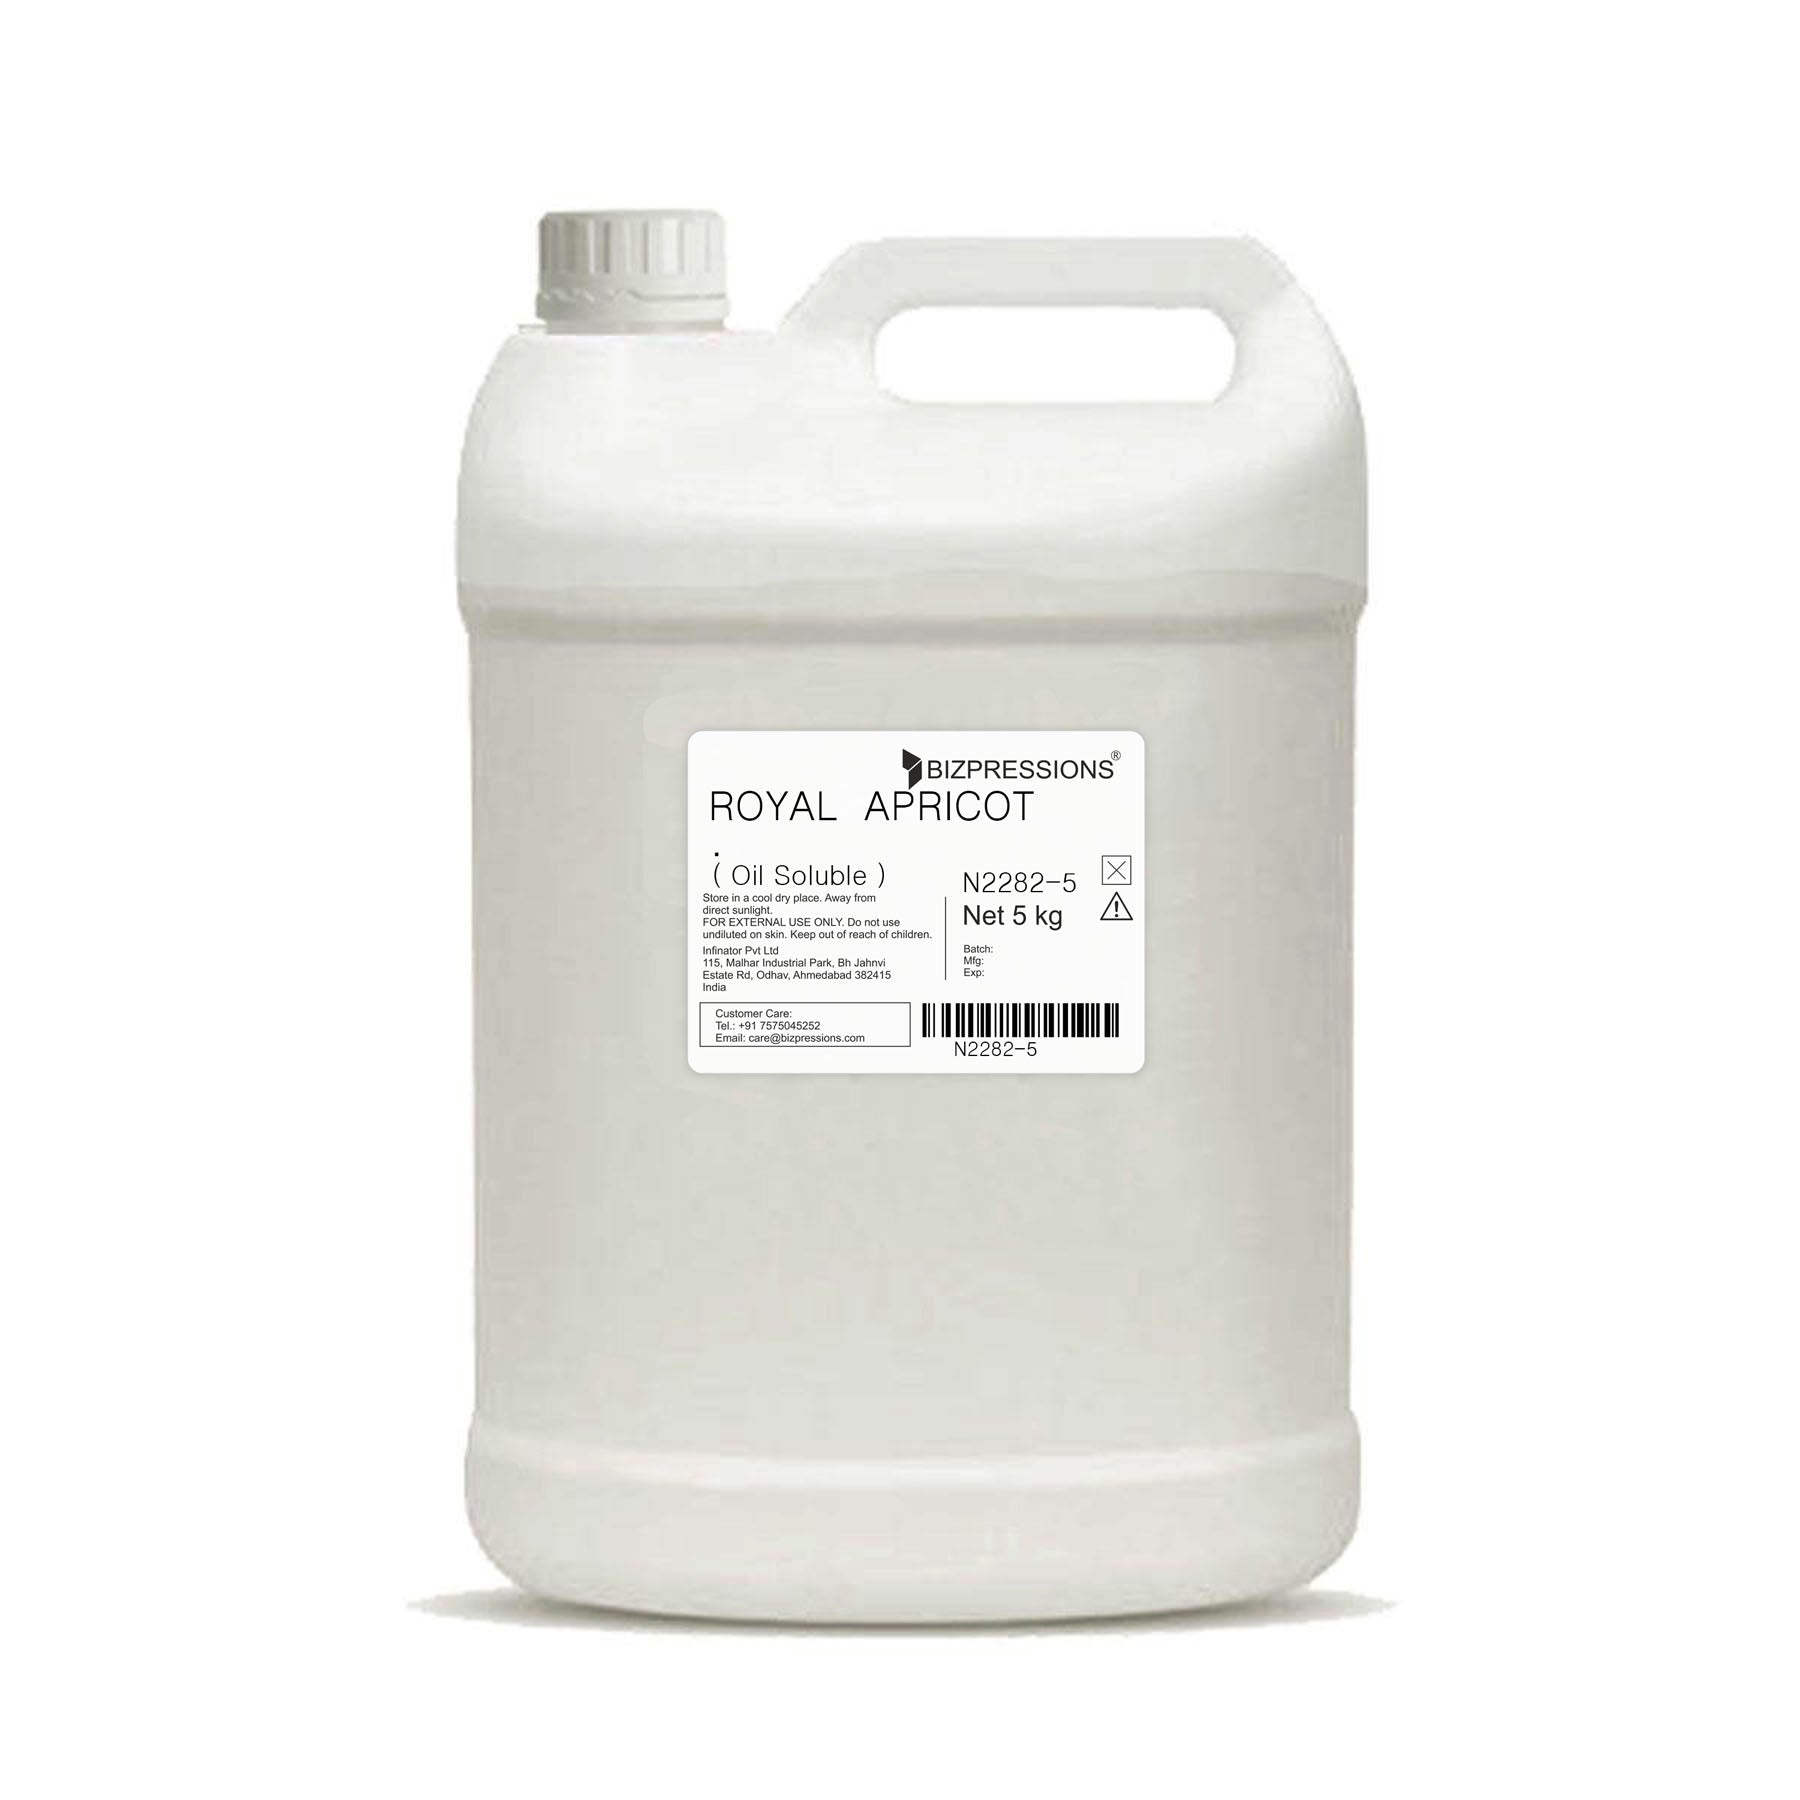 ROYAL APRICOT - Fragrance ( Oil Soluble ) - 5 kg